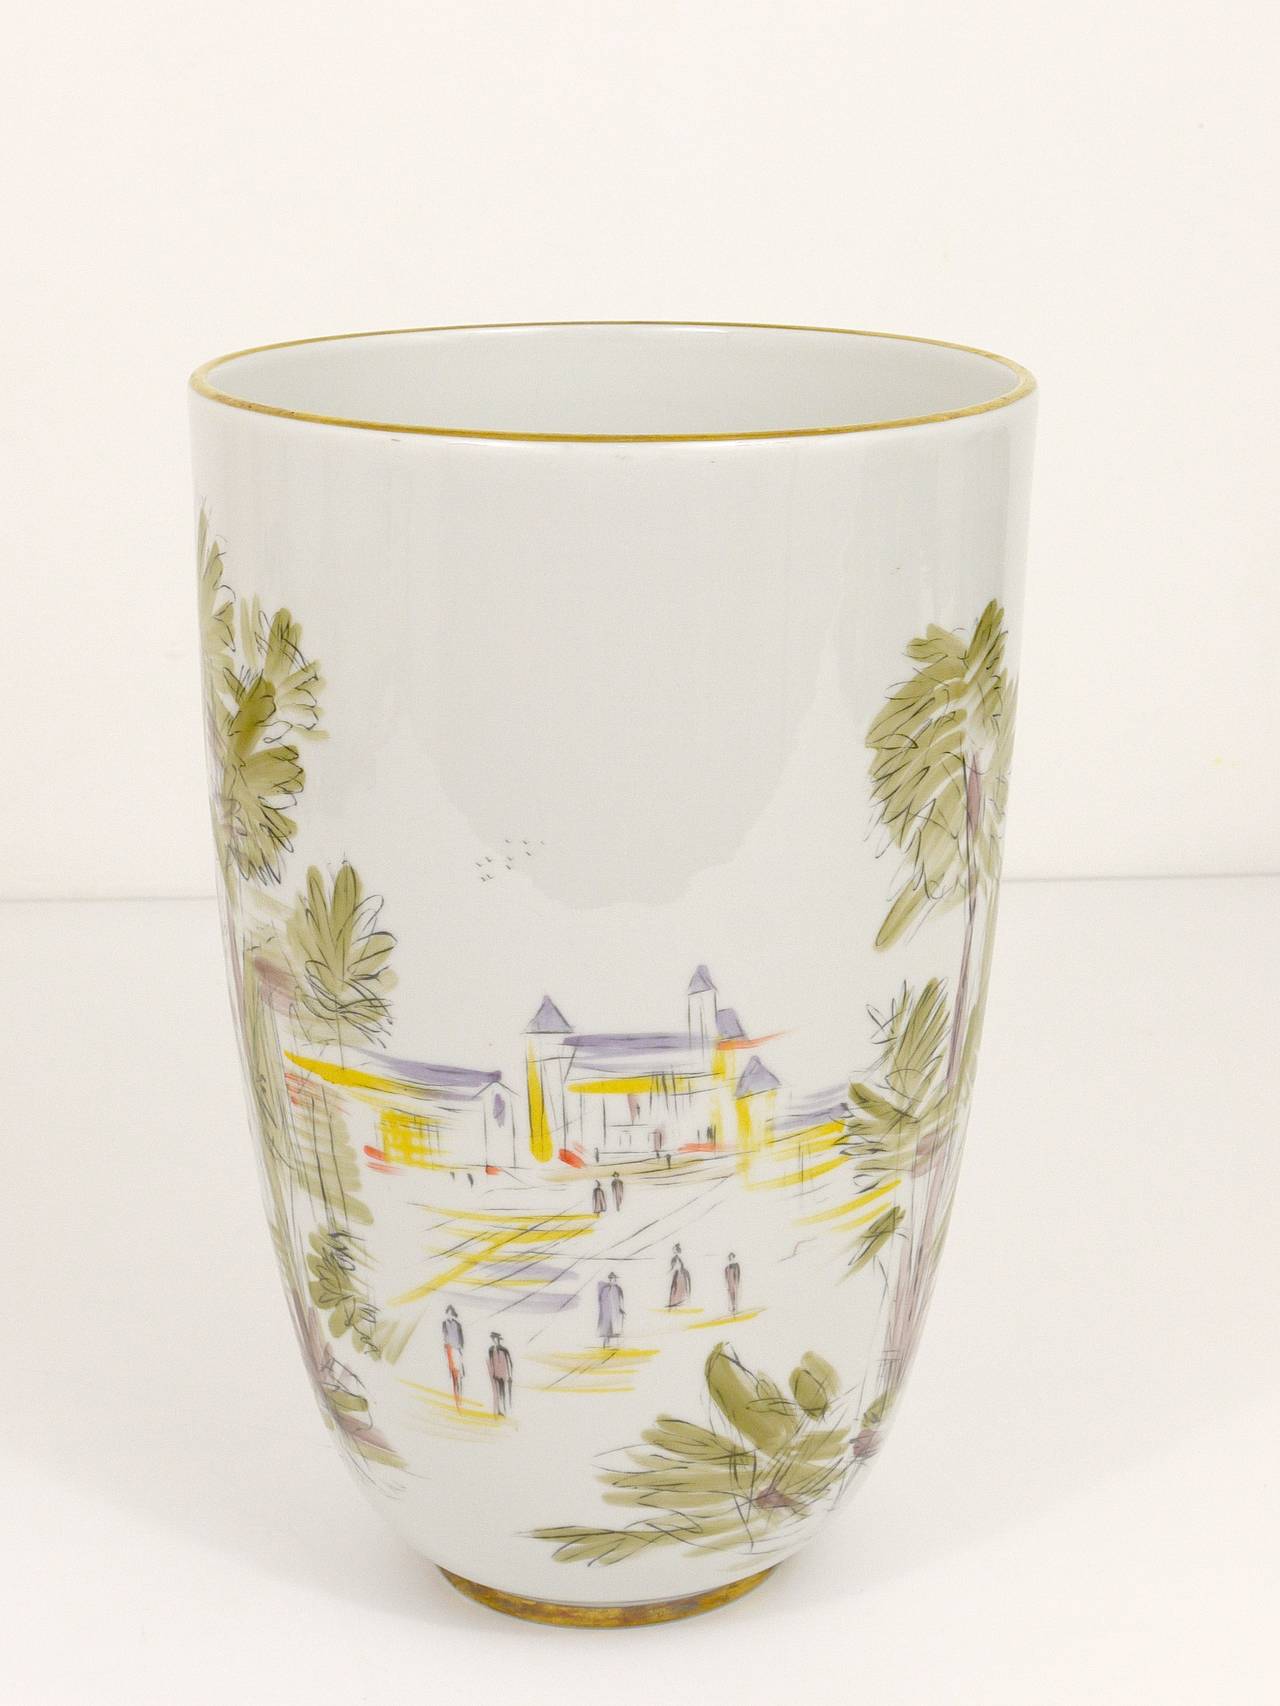 Huge Hutschenreuther Handpainted Midcentury Porcelain Vase, Selb, Germany, 1950s For Sale 2